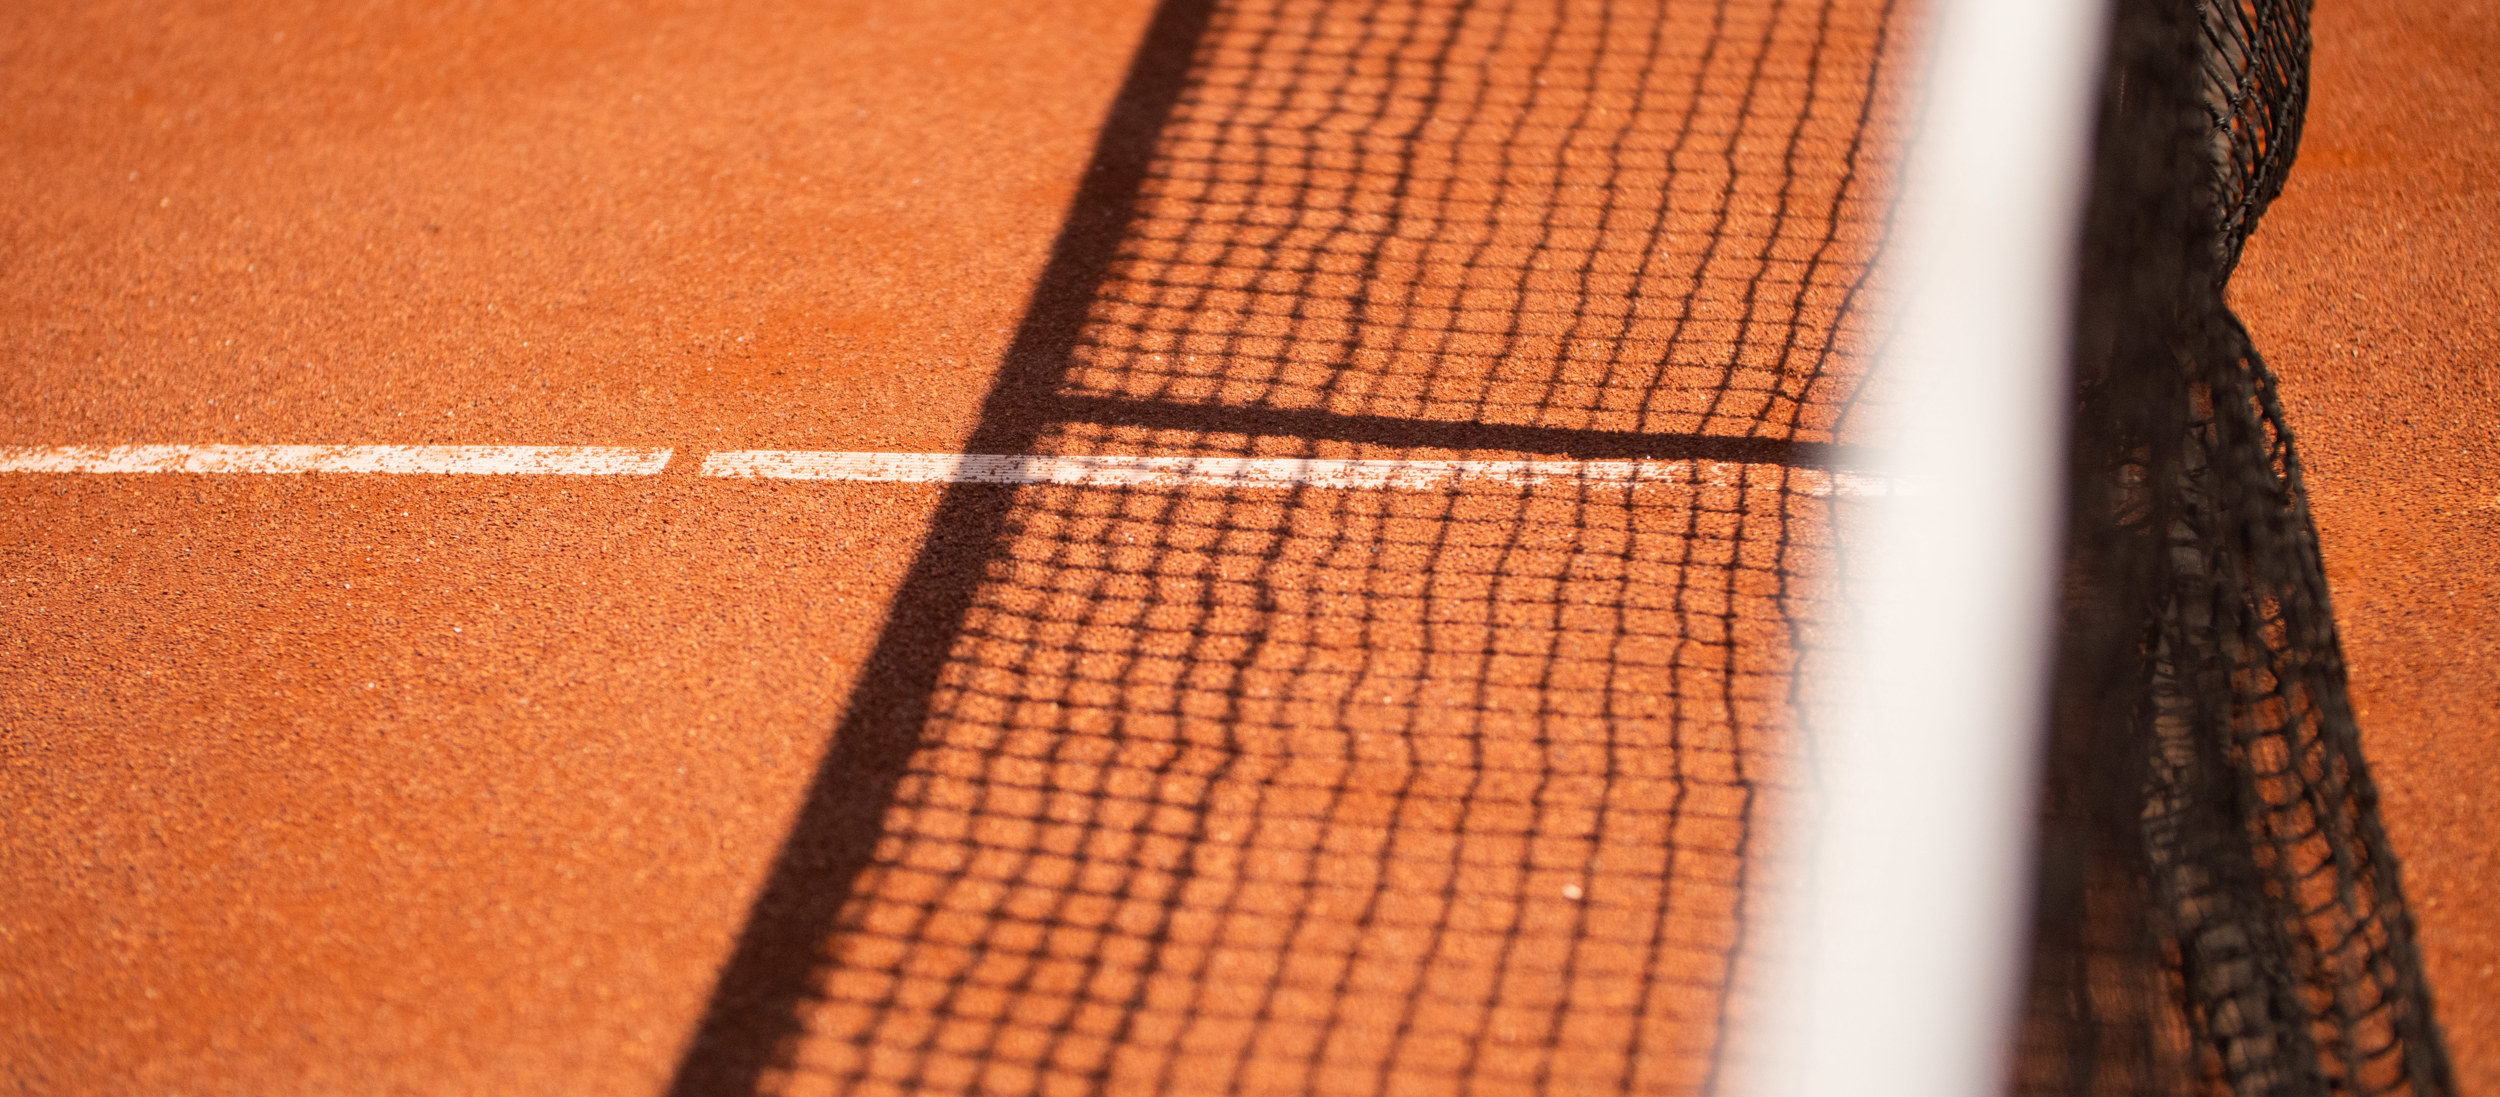 Tennisbaan gravel net